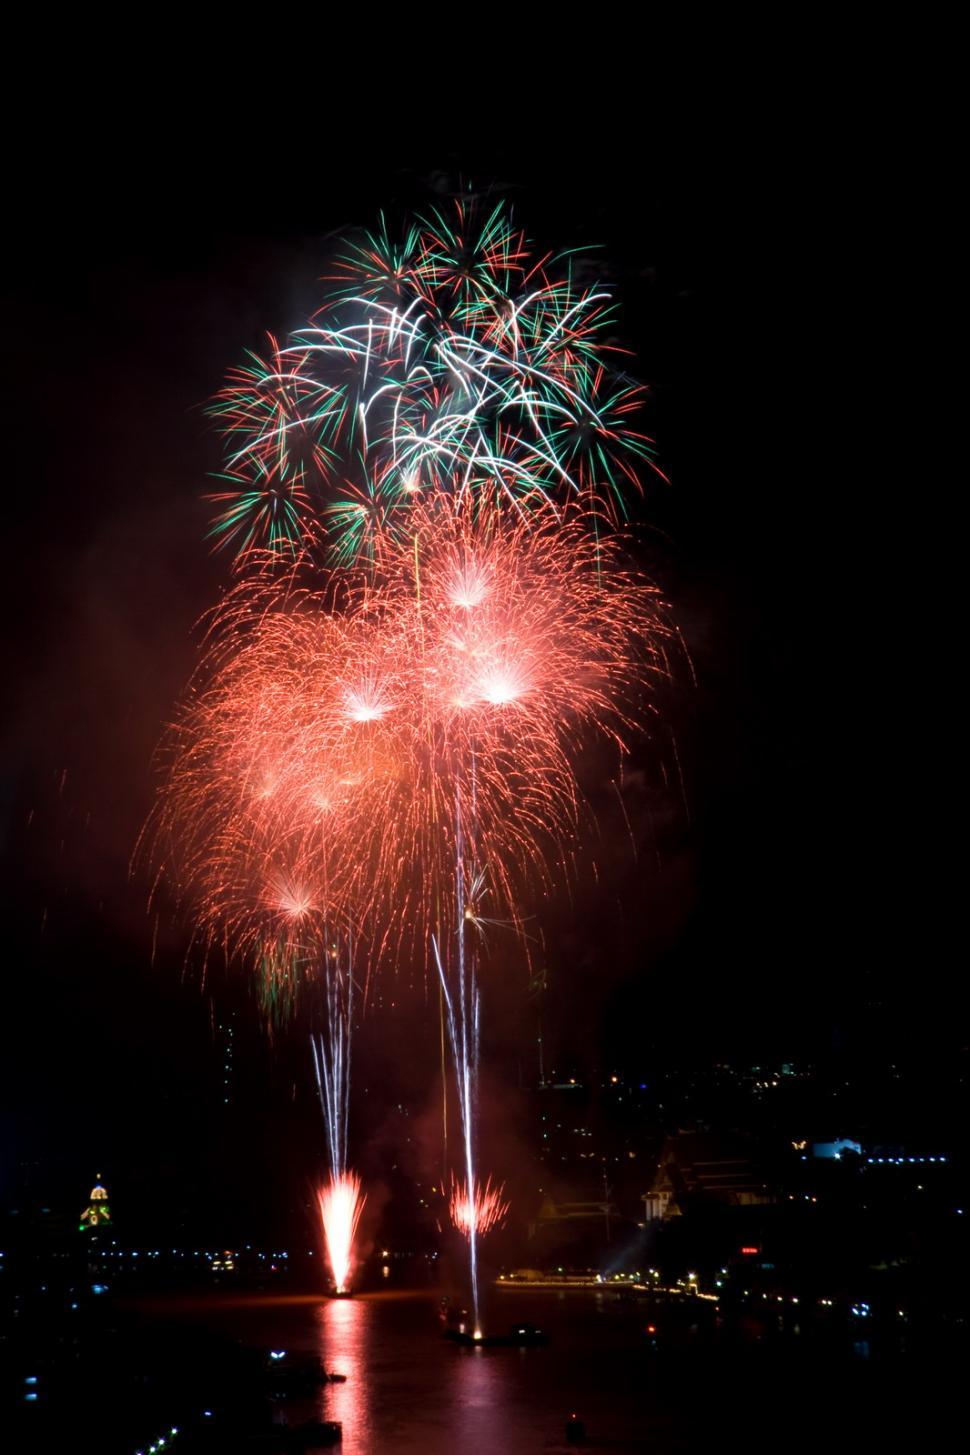 Free Image of Fireworks over Chao Phraya river, Bangkok 